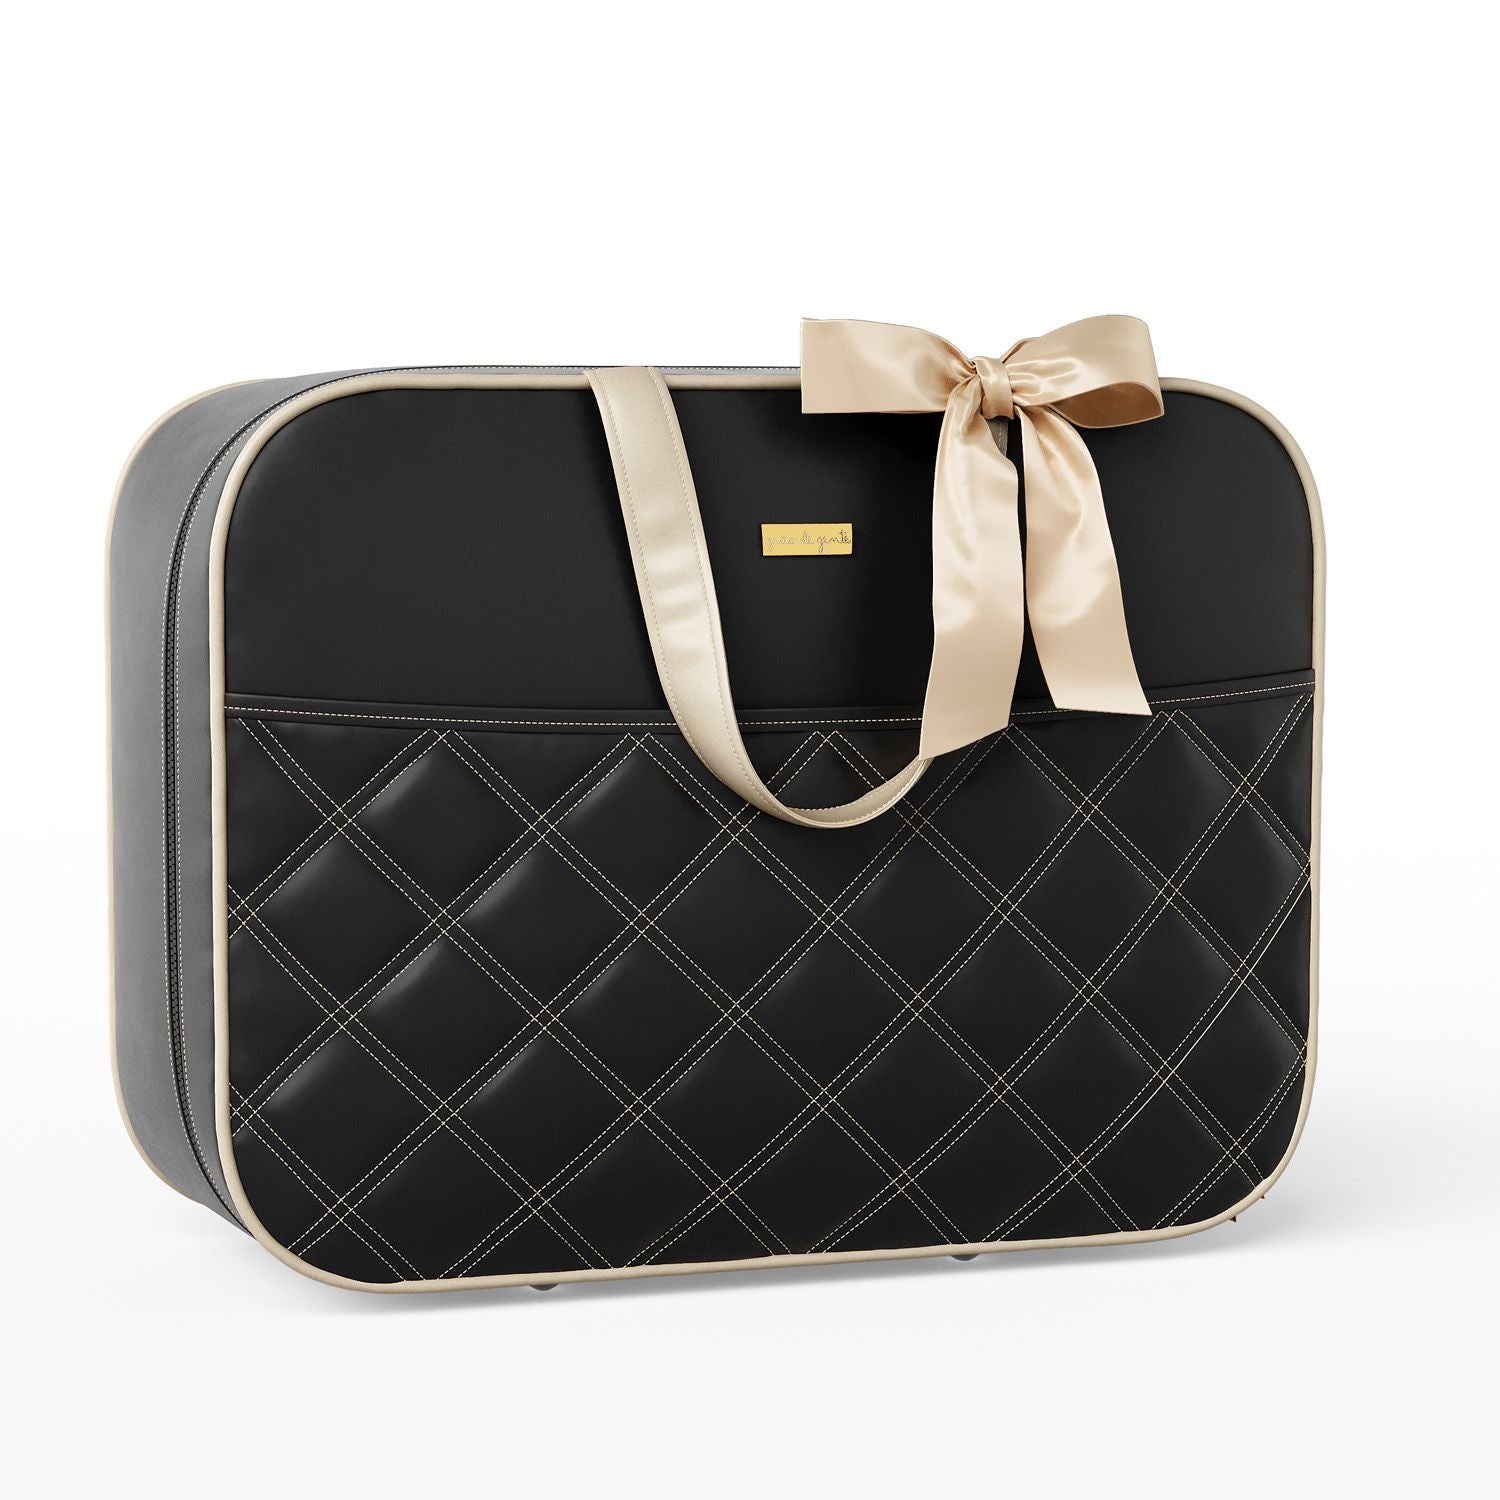 3 Piece Black and Beige Luxury Diaper Bag Set